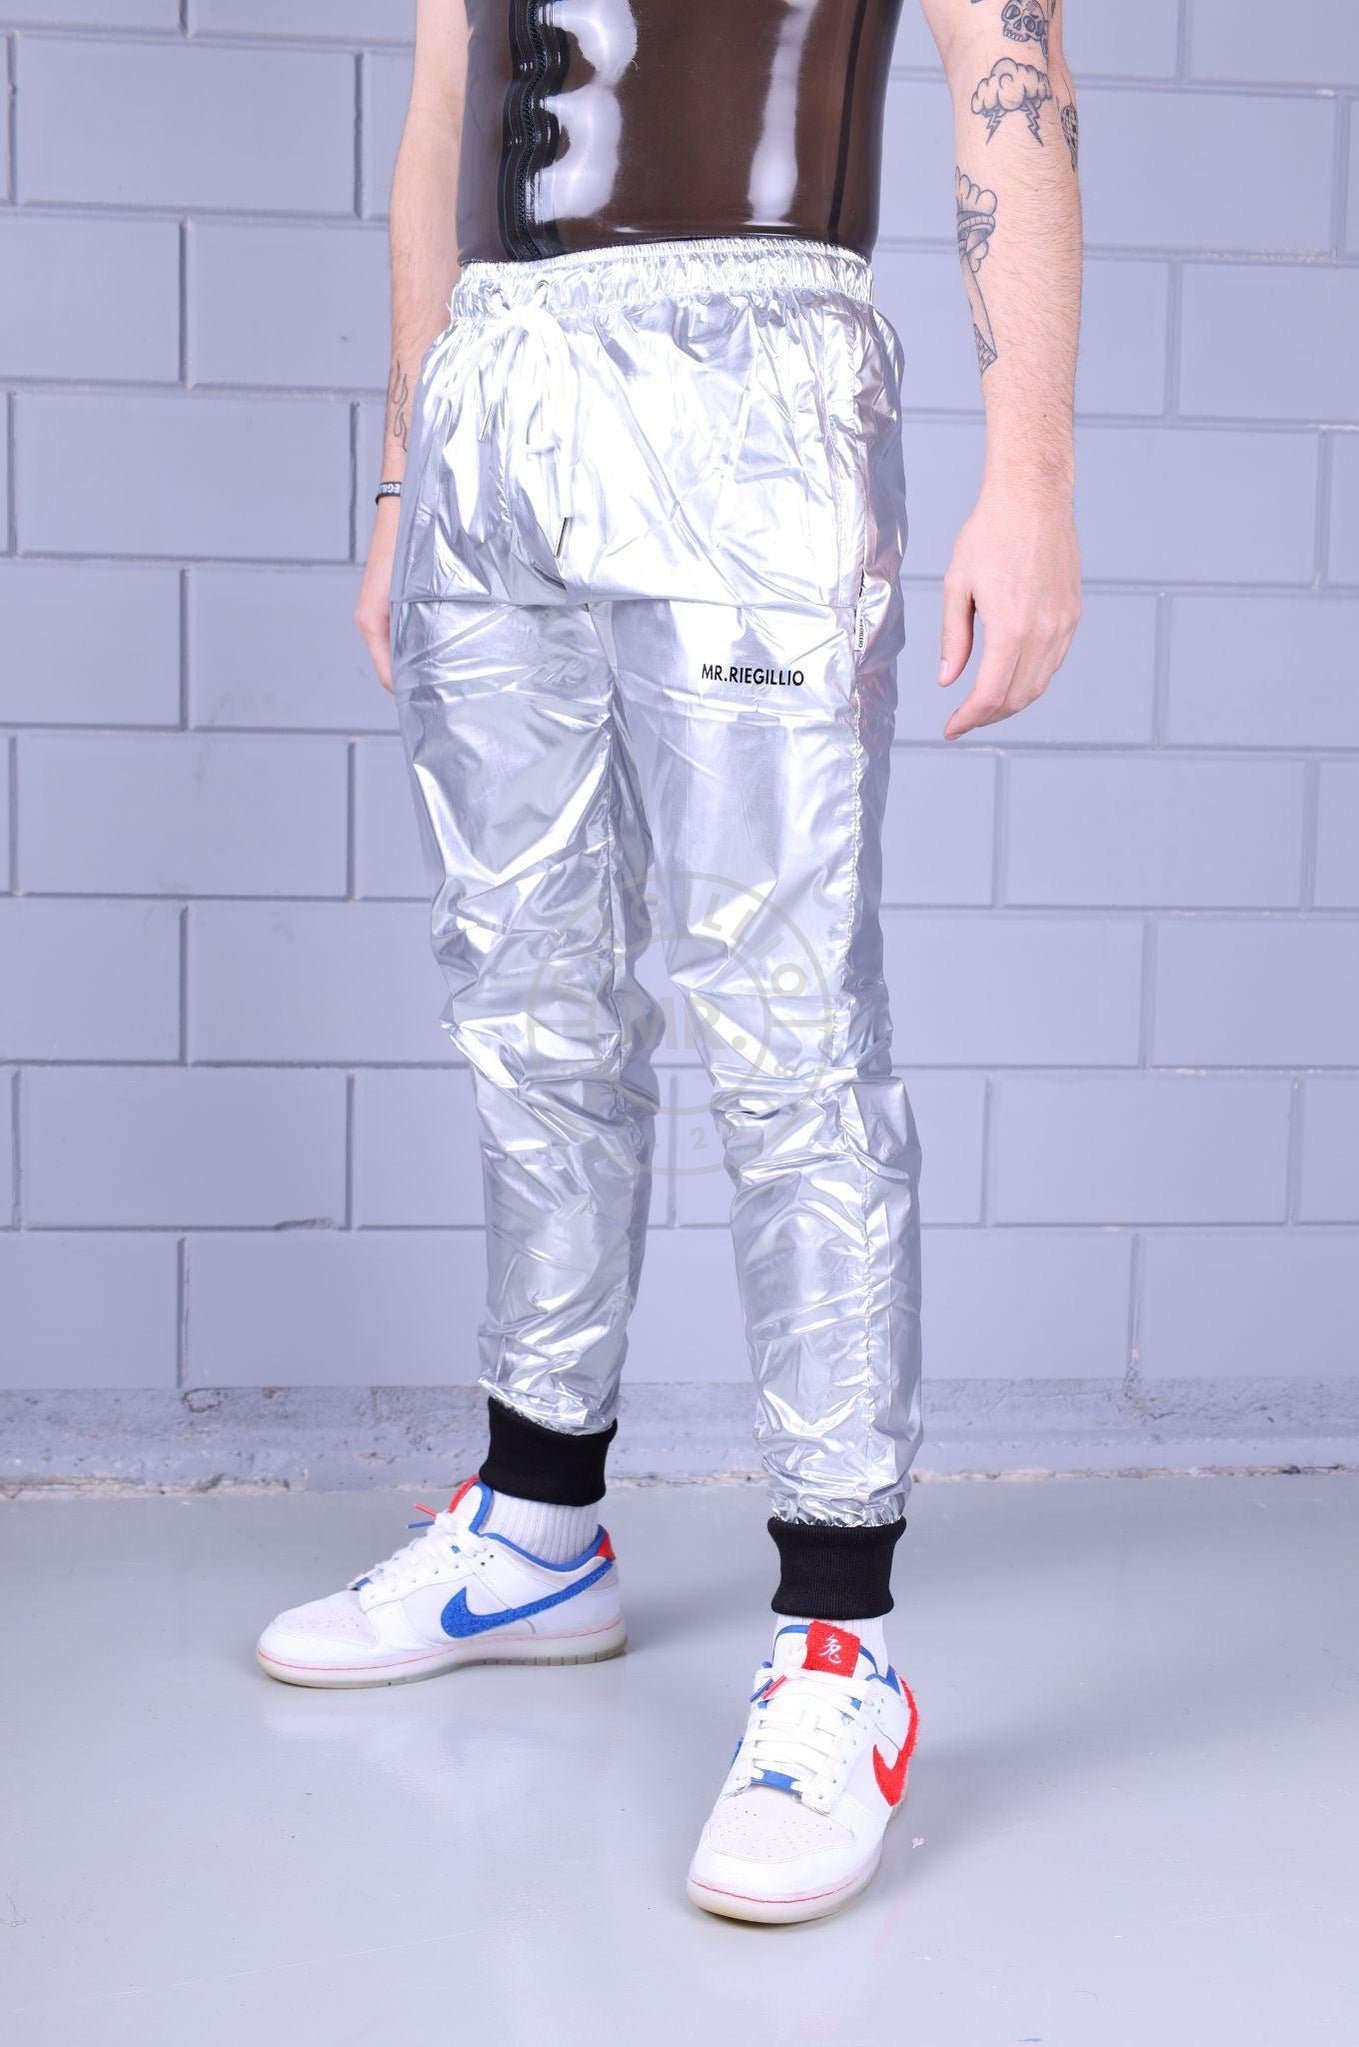 Shiny Nylon Tracksuit Pants - Silver-at MR. Riegillio